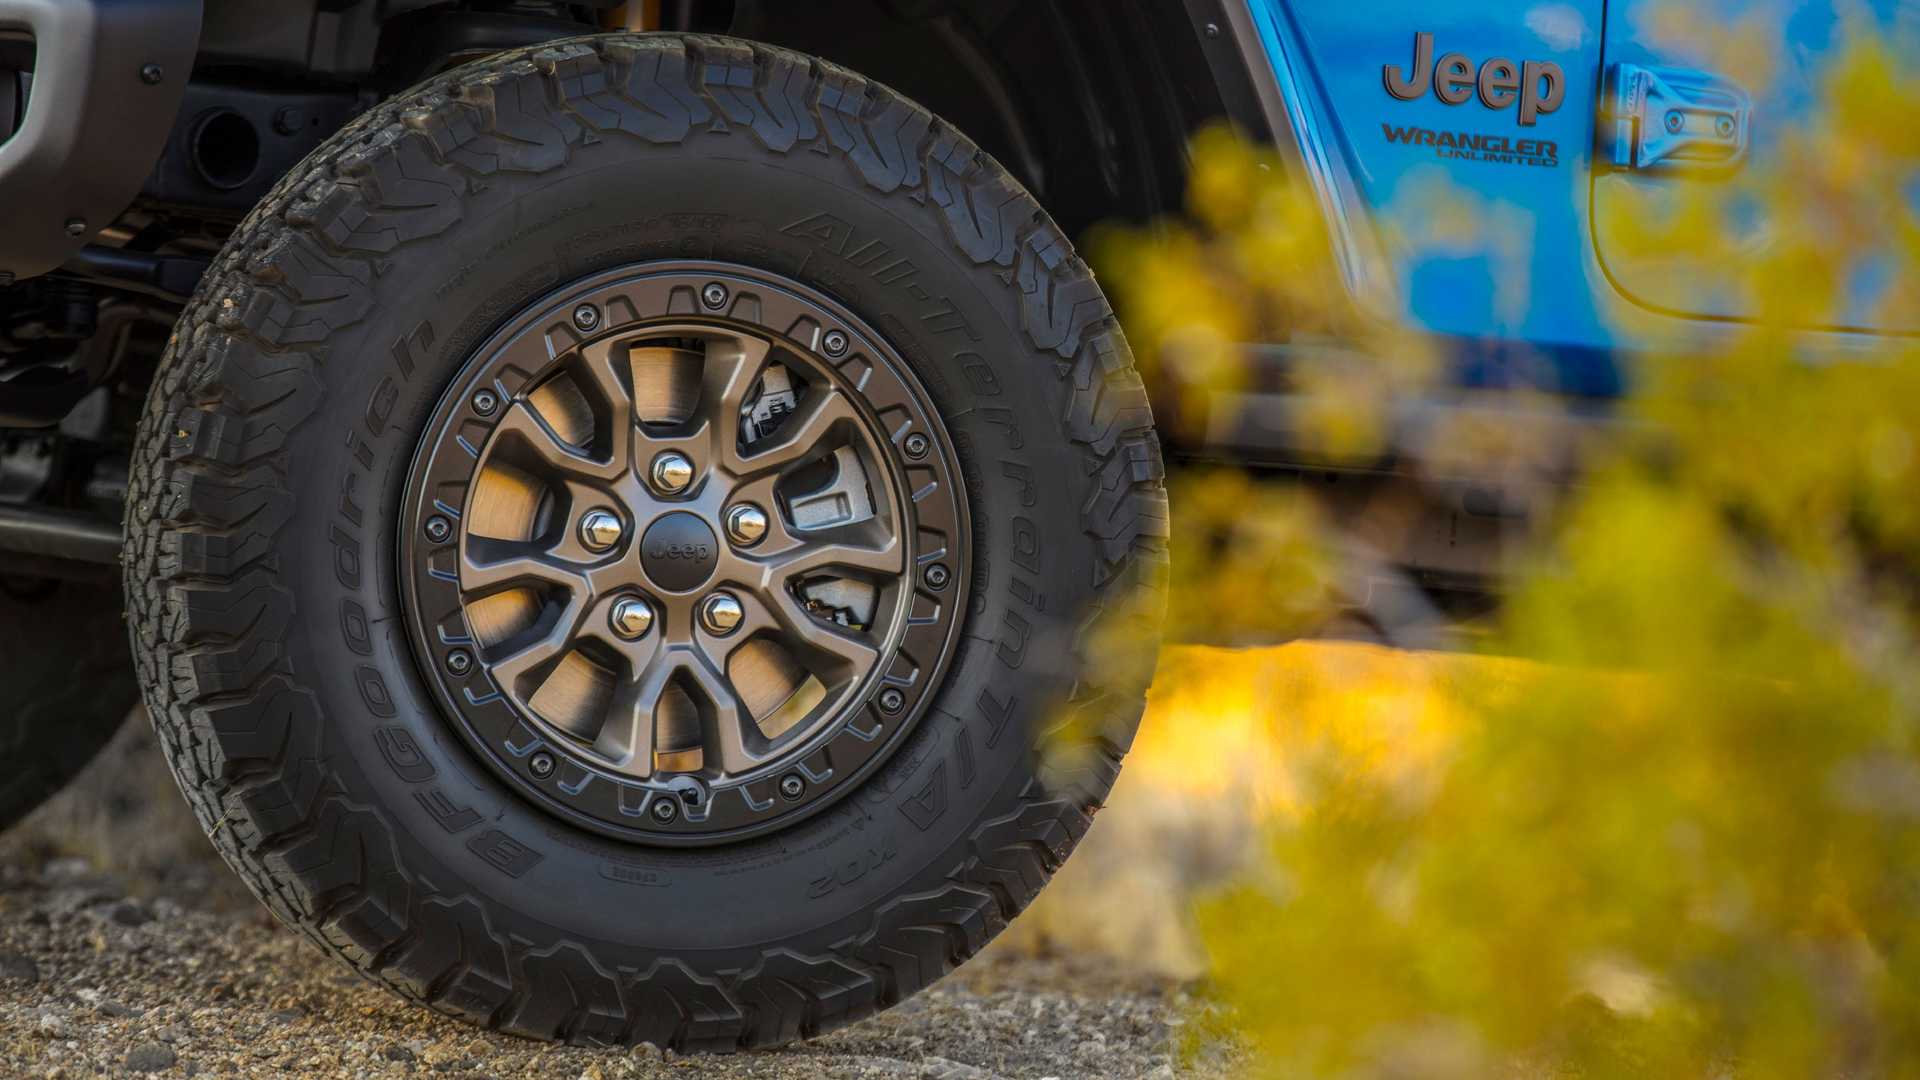 2021 Jeep Wrangler Rubicon 392 HEMI V8 Fuel Economy ...